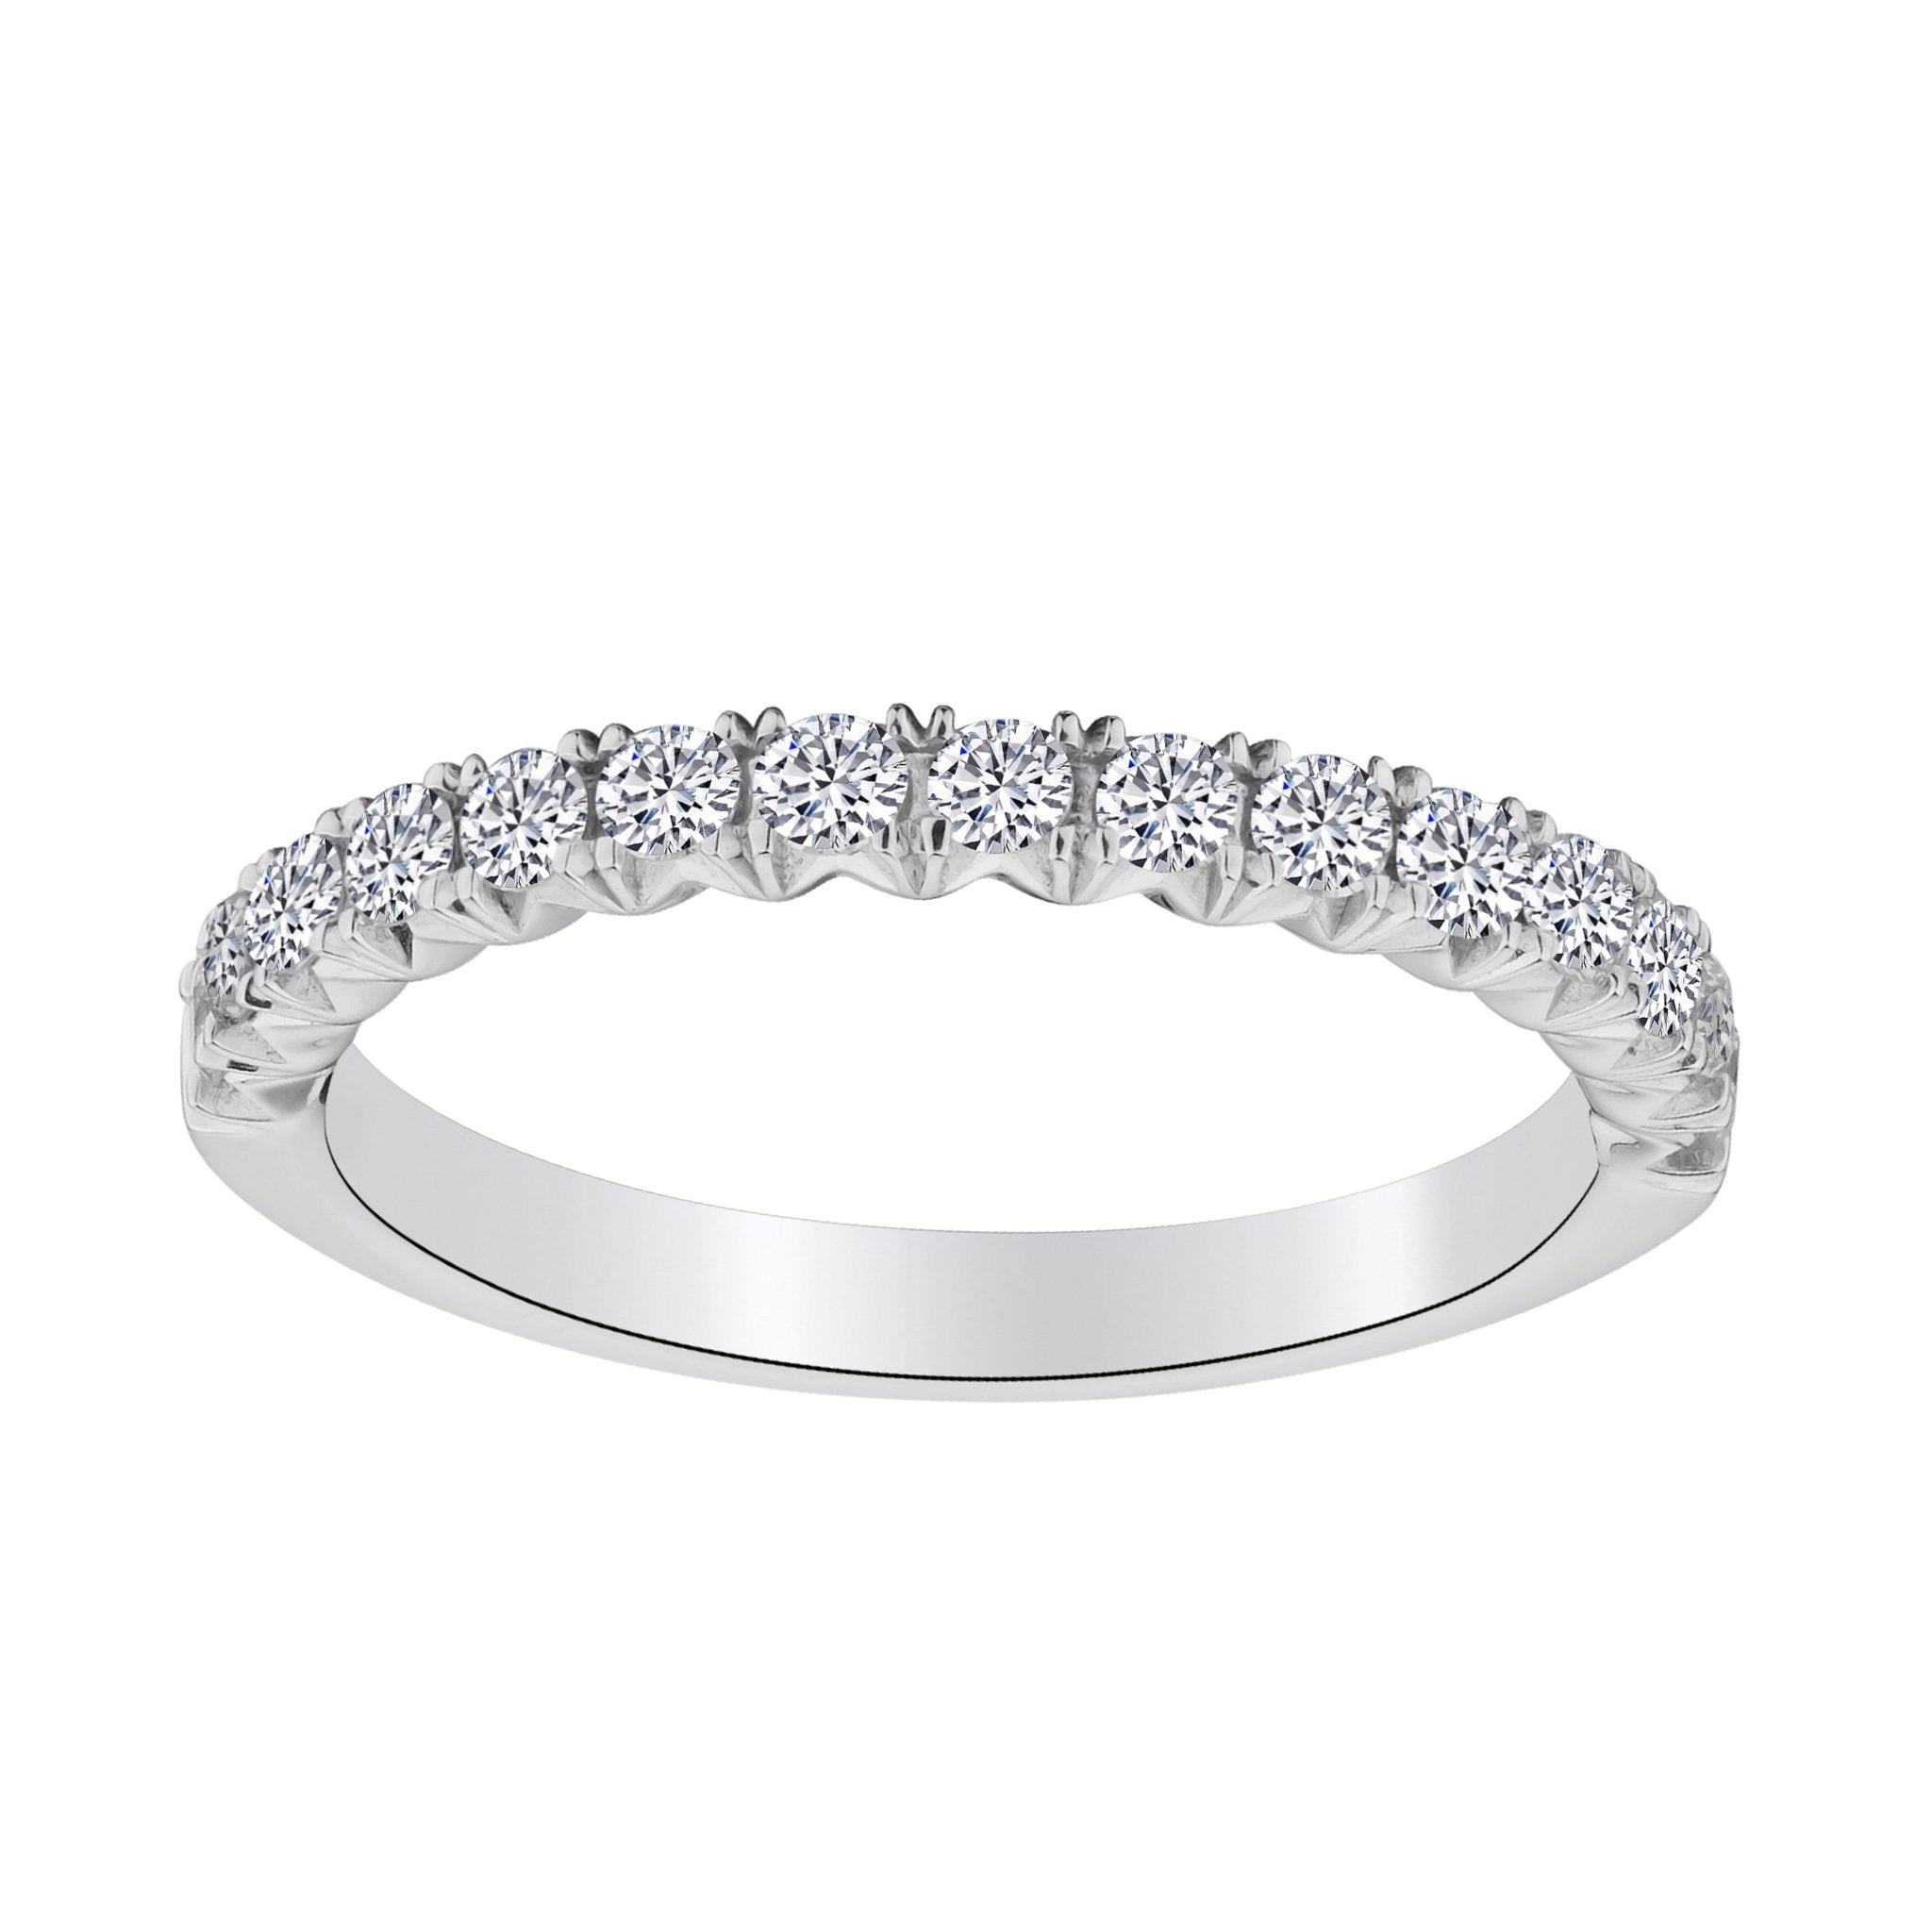 .50 Carat of Diamonds "Luxury" Ring, 14kt White Gold…....................NOW